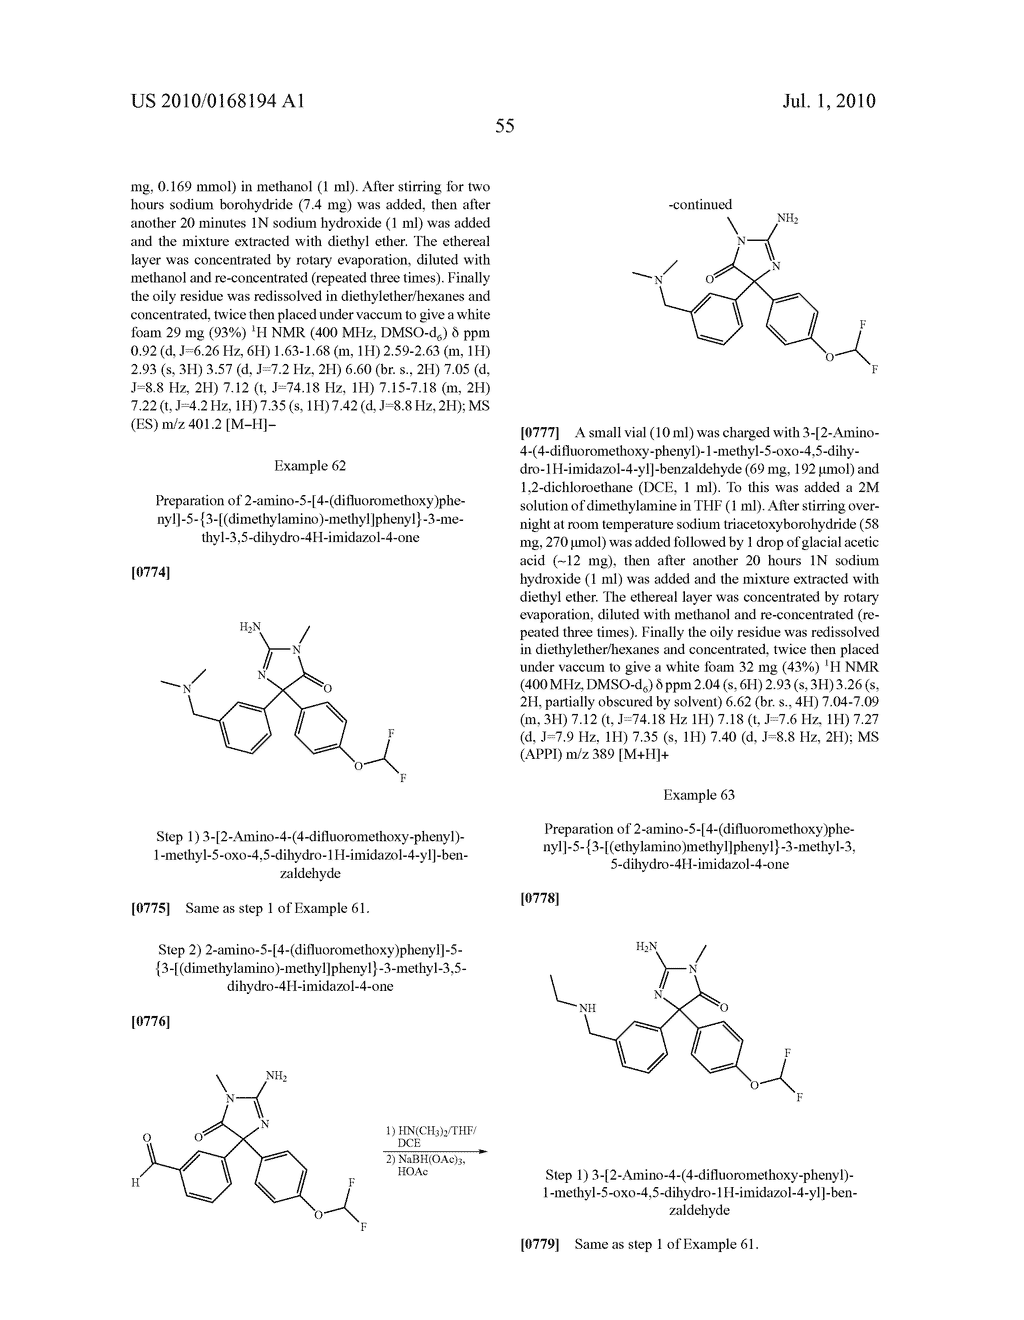 Amino-5-[4-(difluoromethoxy)phenyl]-5-phenylimidazolone Compounds For The Inhibition Of Beta-secretase - diagram, schematic, and image 56